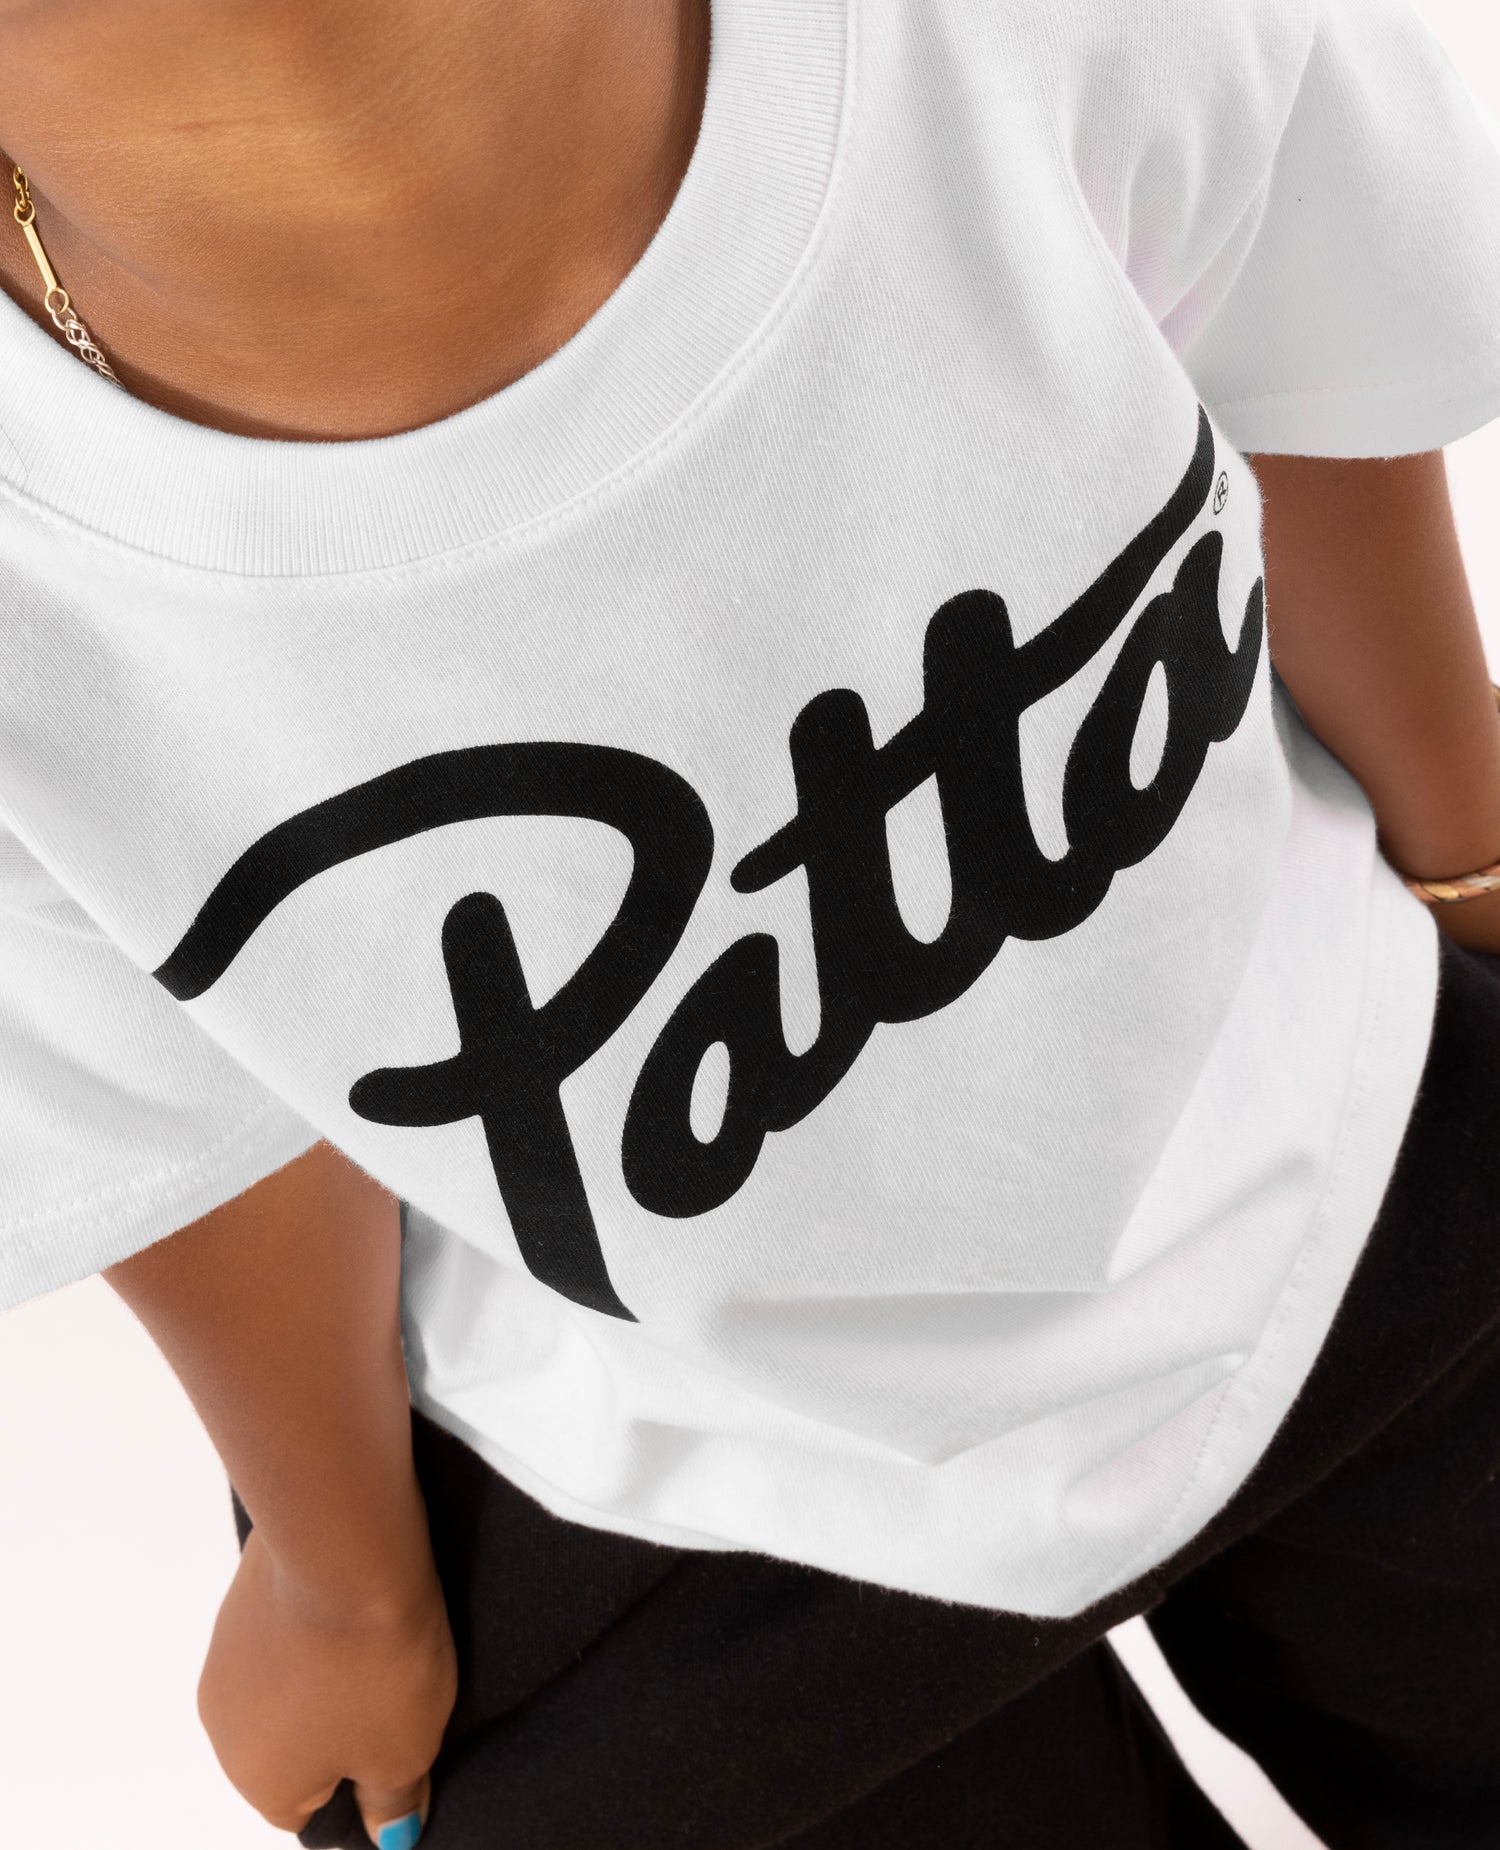 T-shirt avec logo Patta pour enfants (blanc)